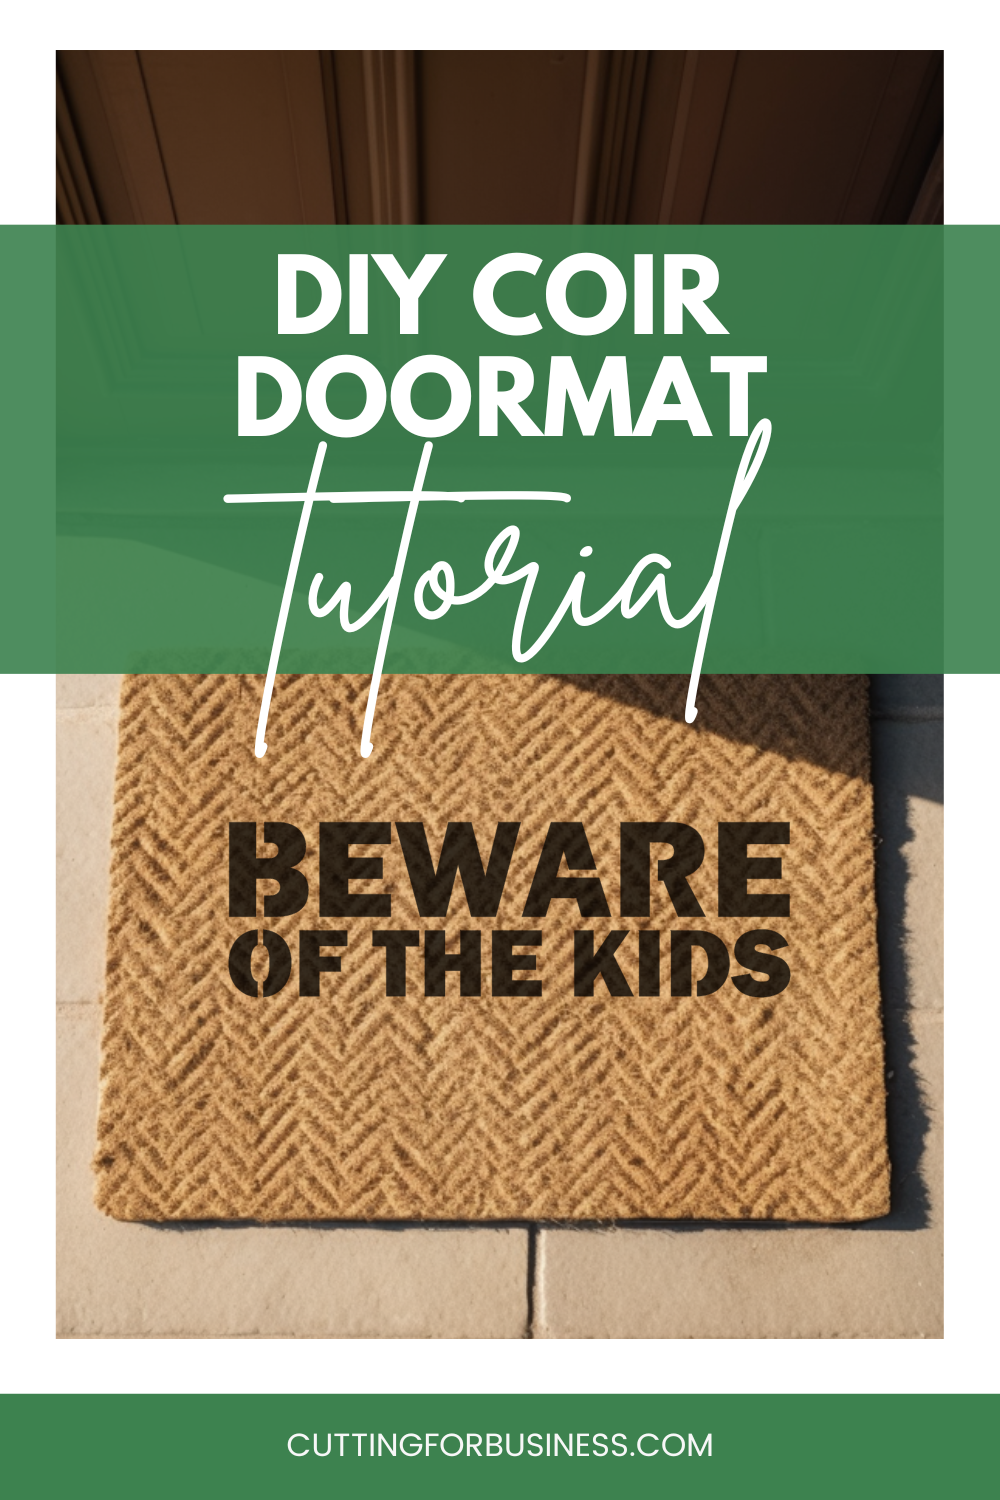 DIY Coir Doormat Tutorial and Costs - cuttingforbusiness.com